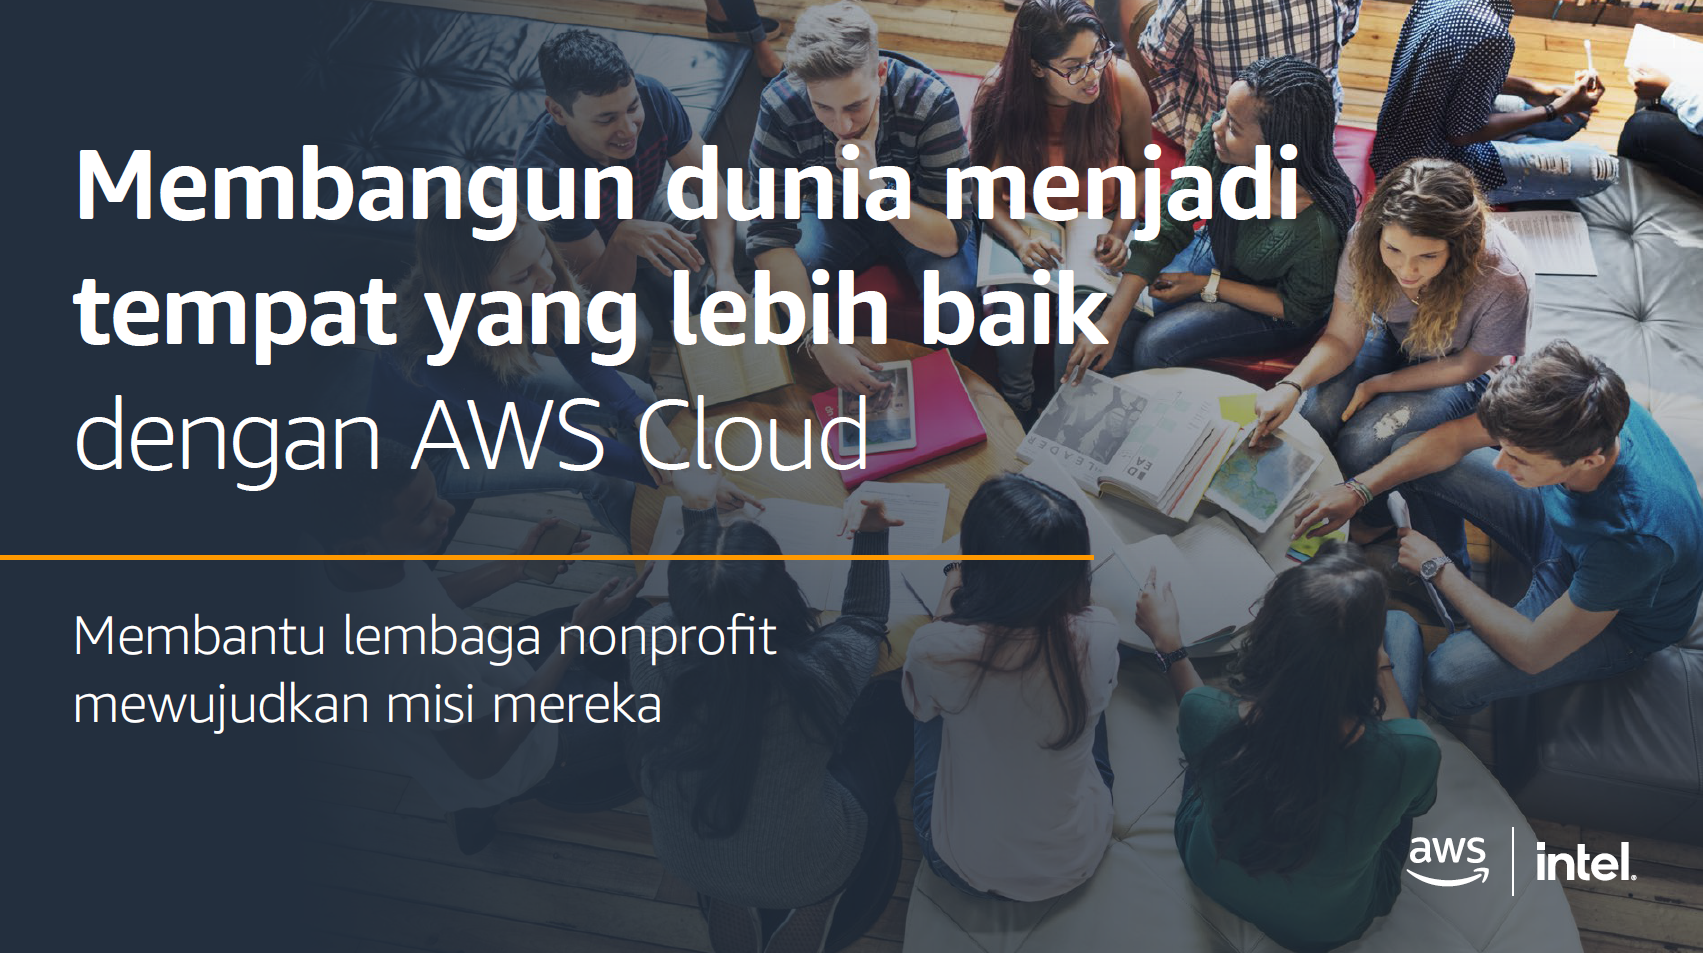 Membuat dunia menjadi tempat yang lebih baik dengan AWS Cloud